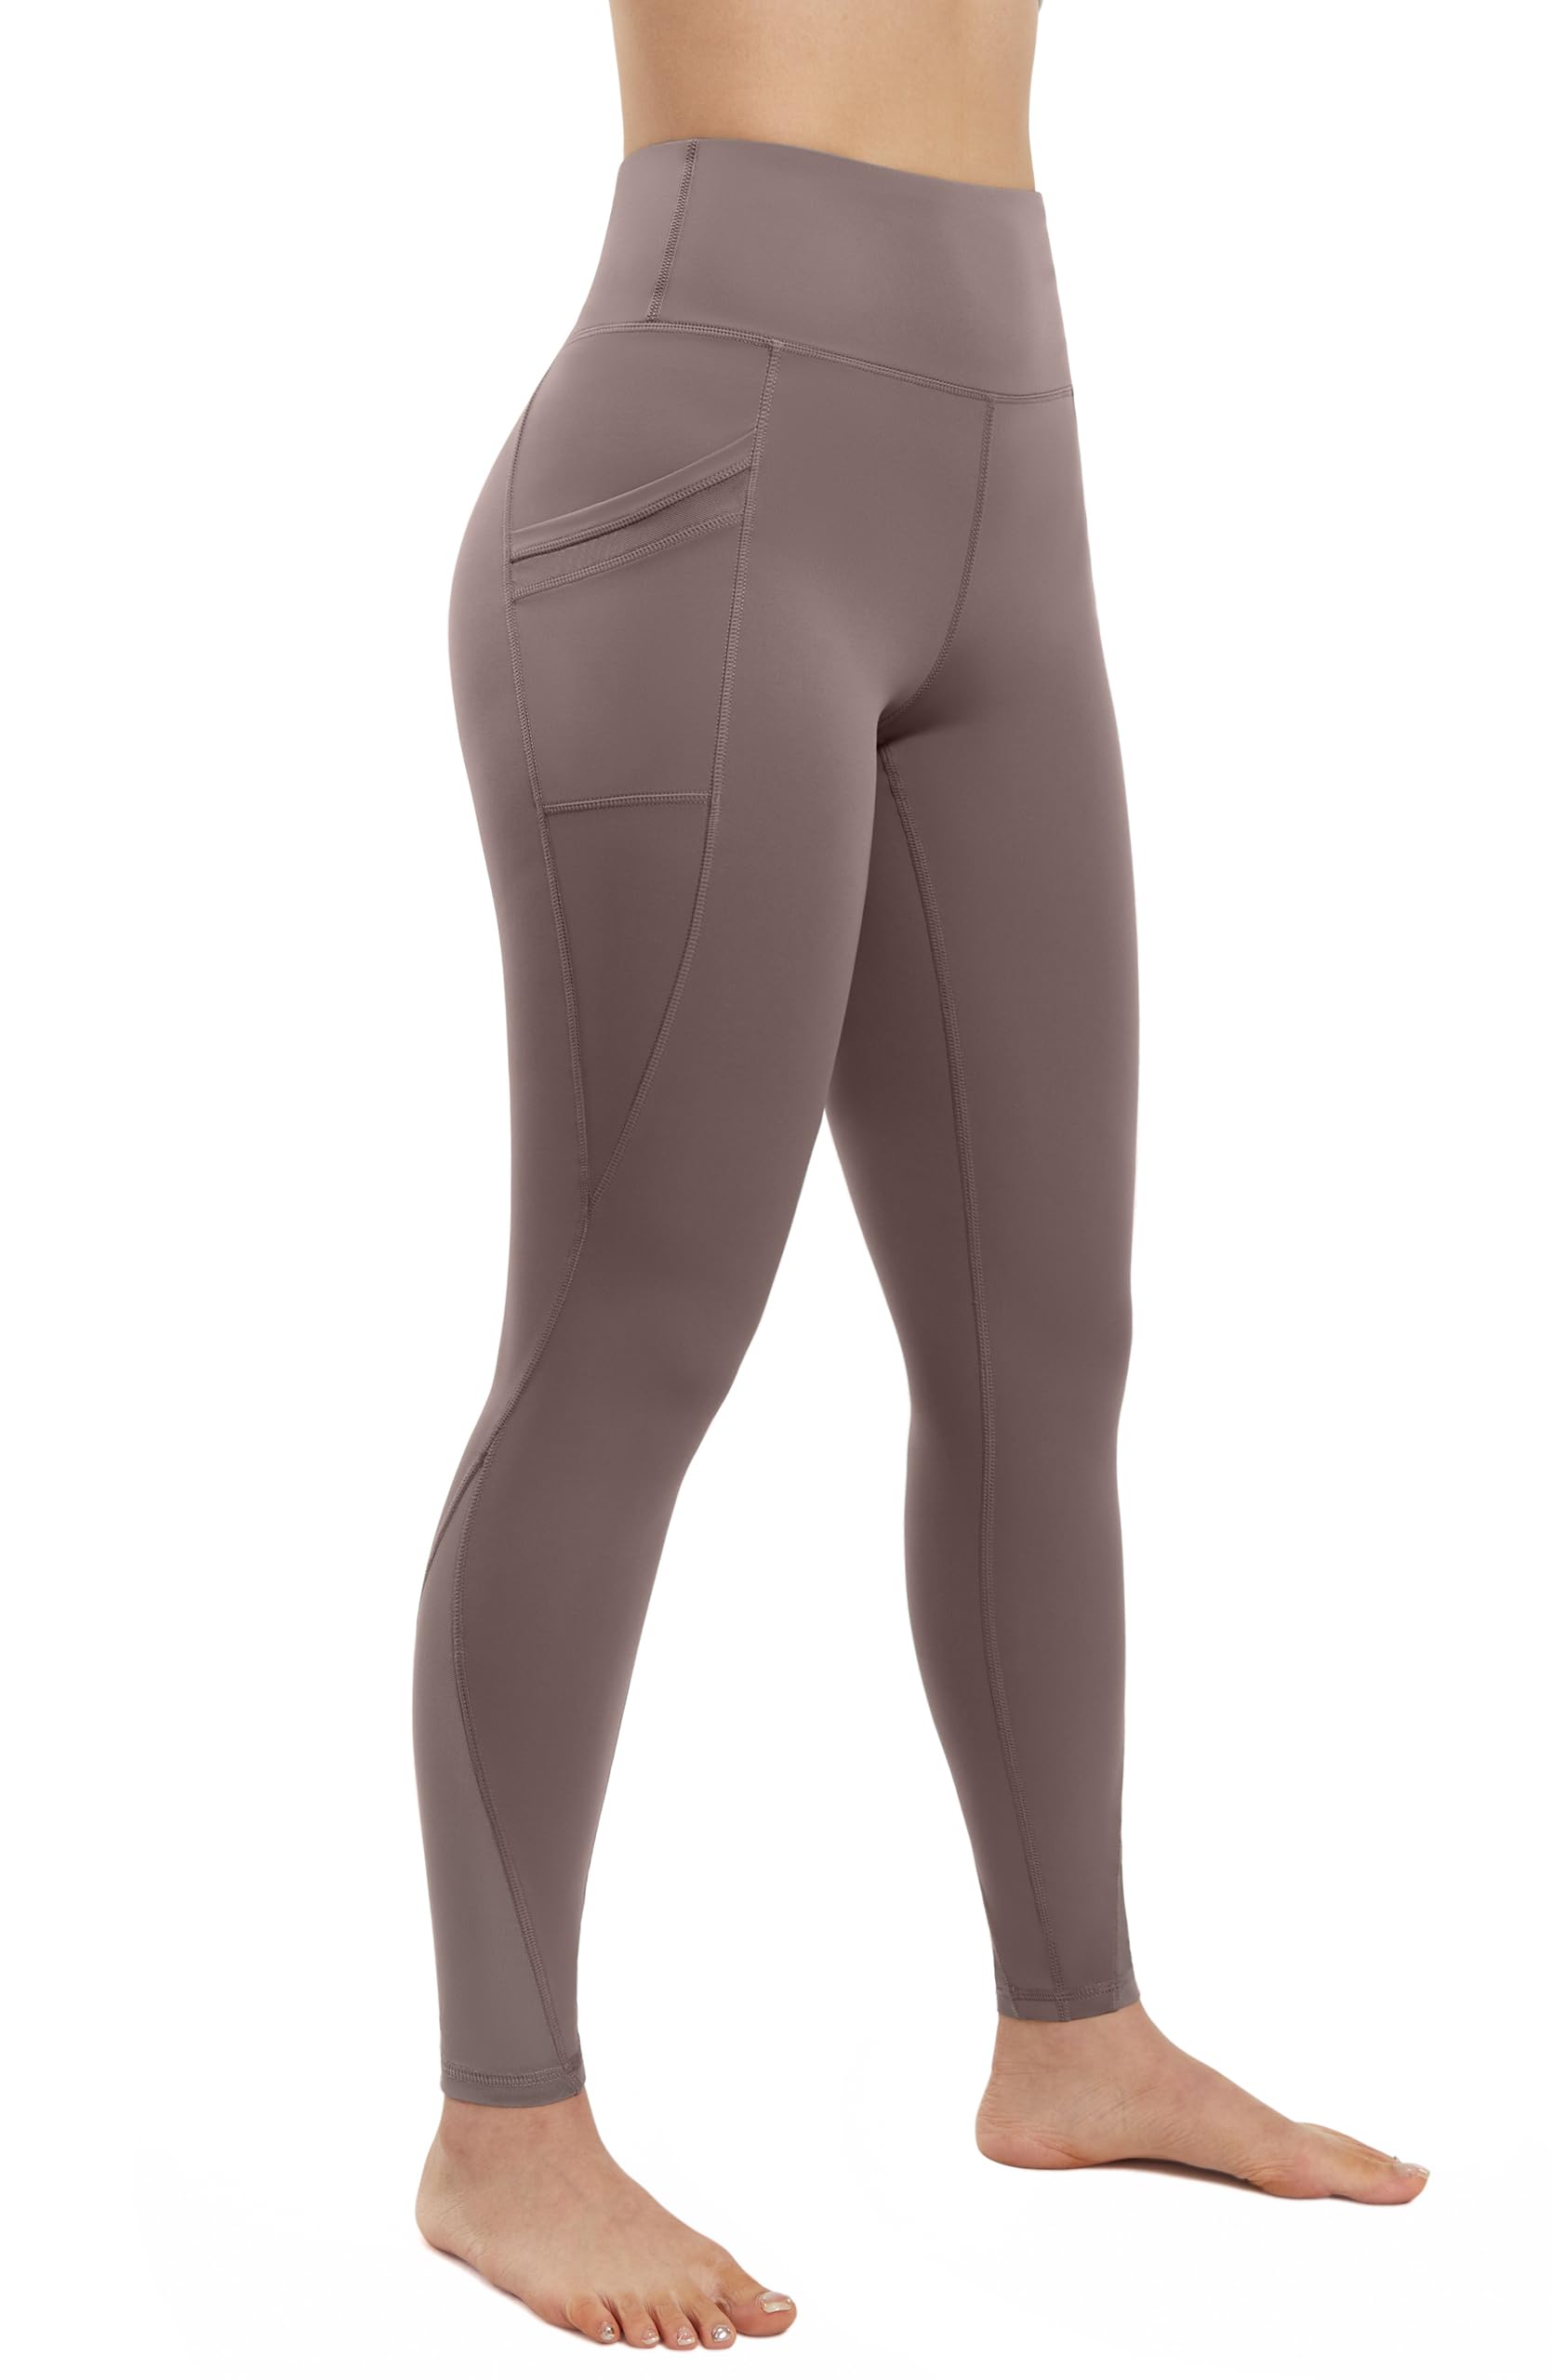 AFITNE Women’s High Waist Mesh Yoga Leggings with Side Pockets, Tummy Control Workout Squat-Proof Yoga Pants